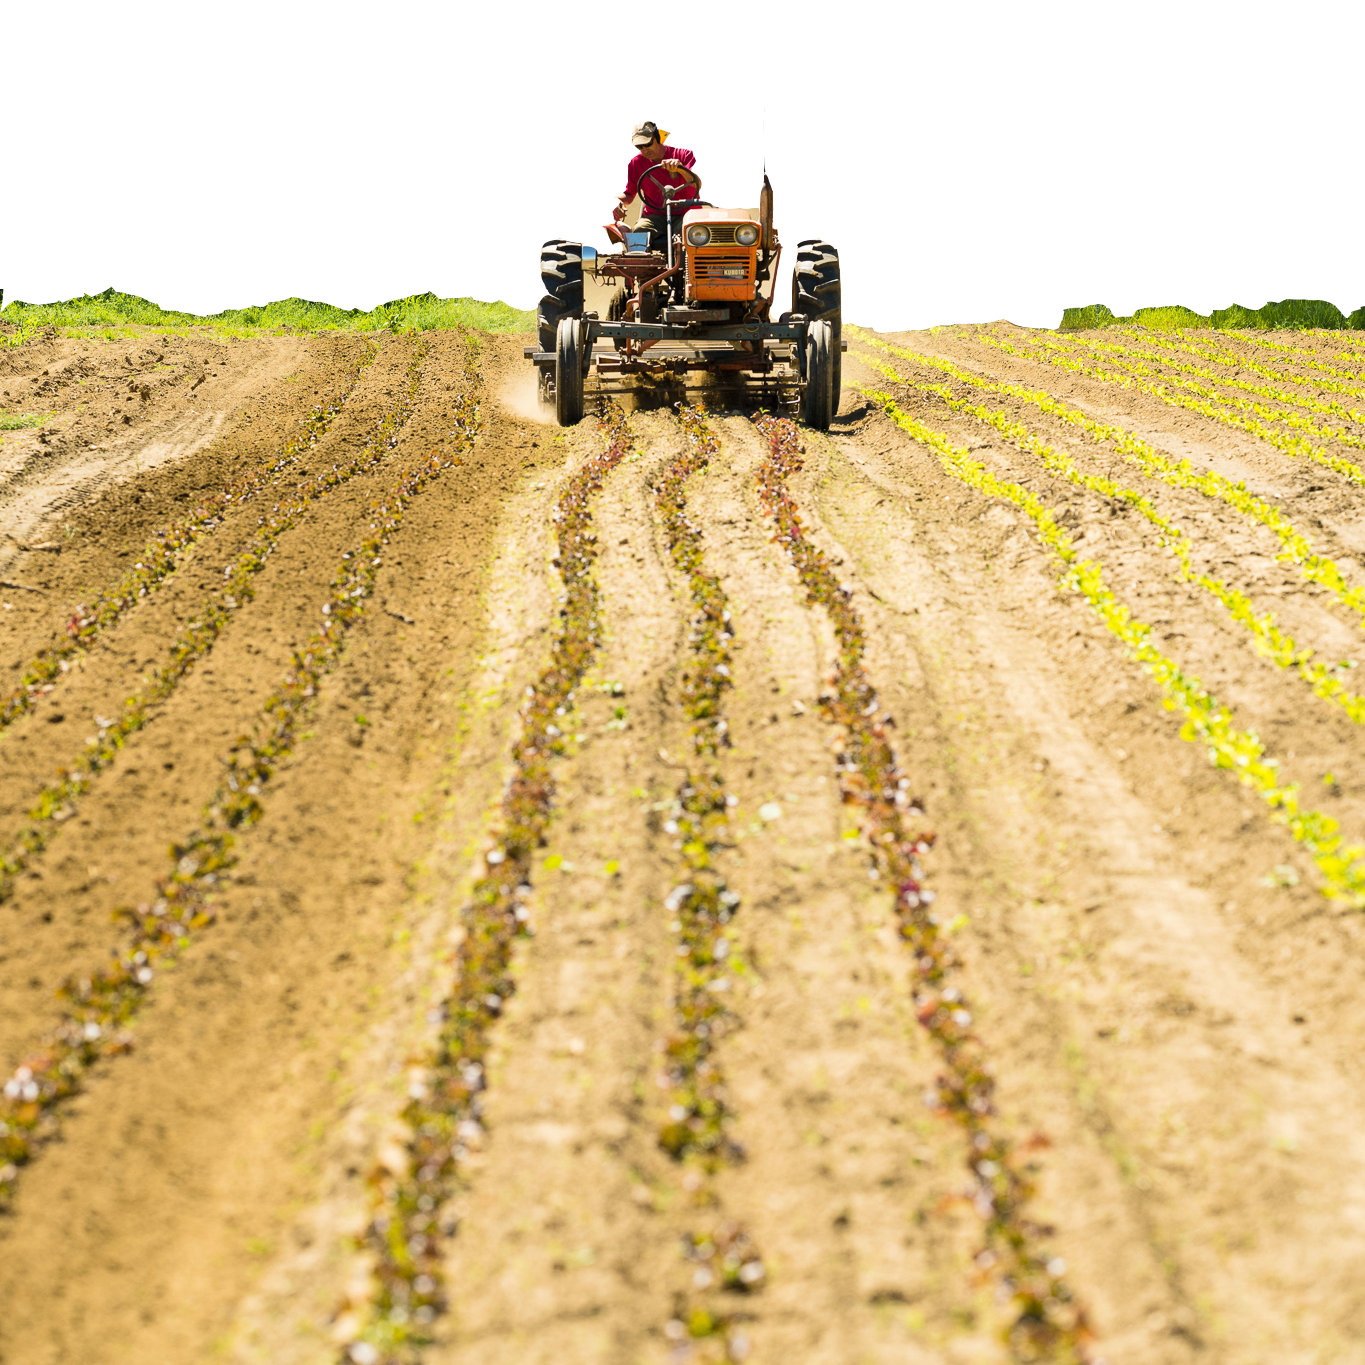 A farmer runs a tractor across a field.